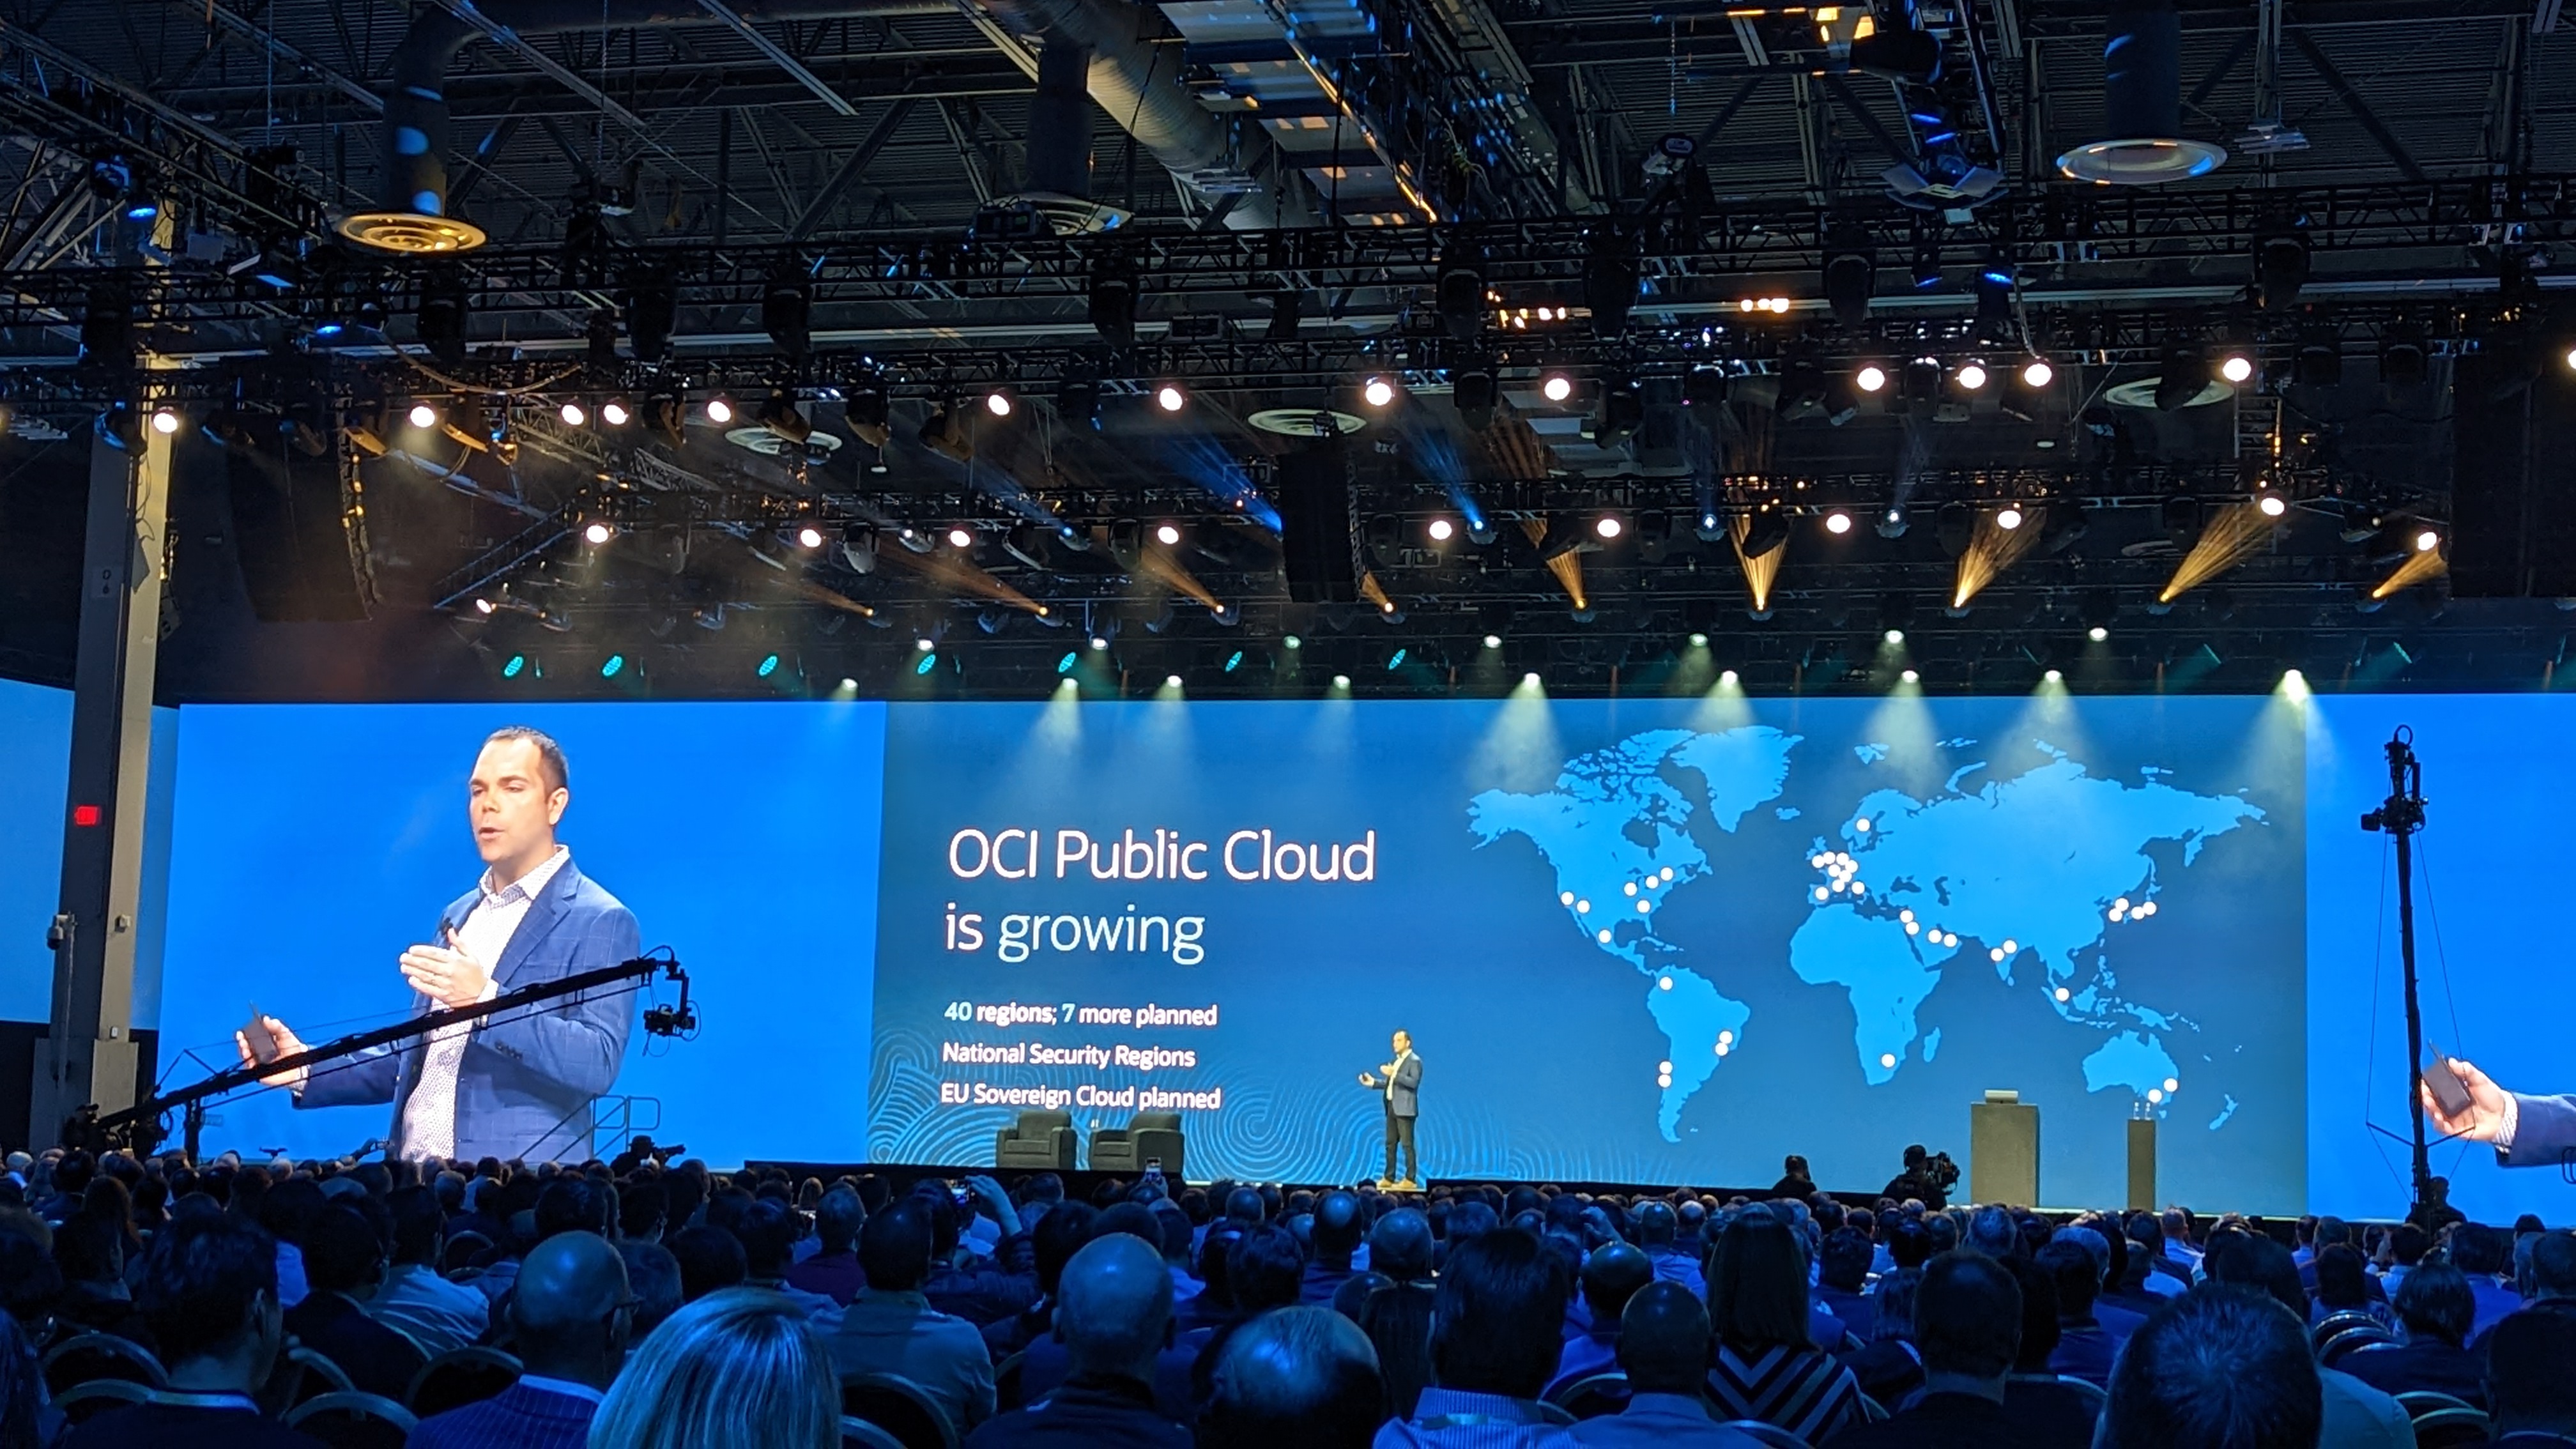 Oracle Cloud World